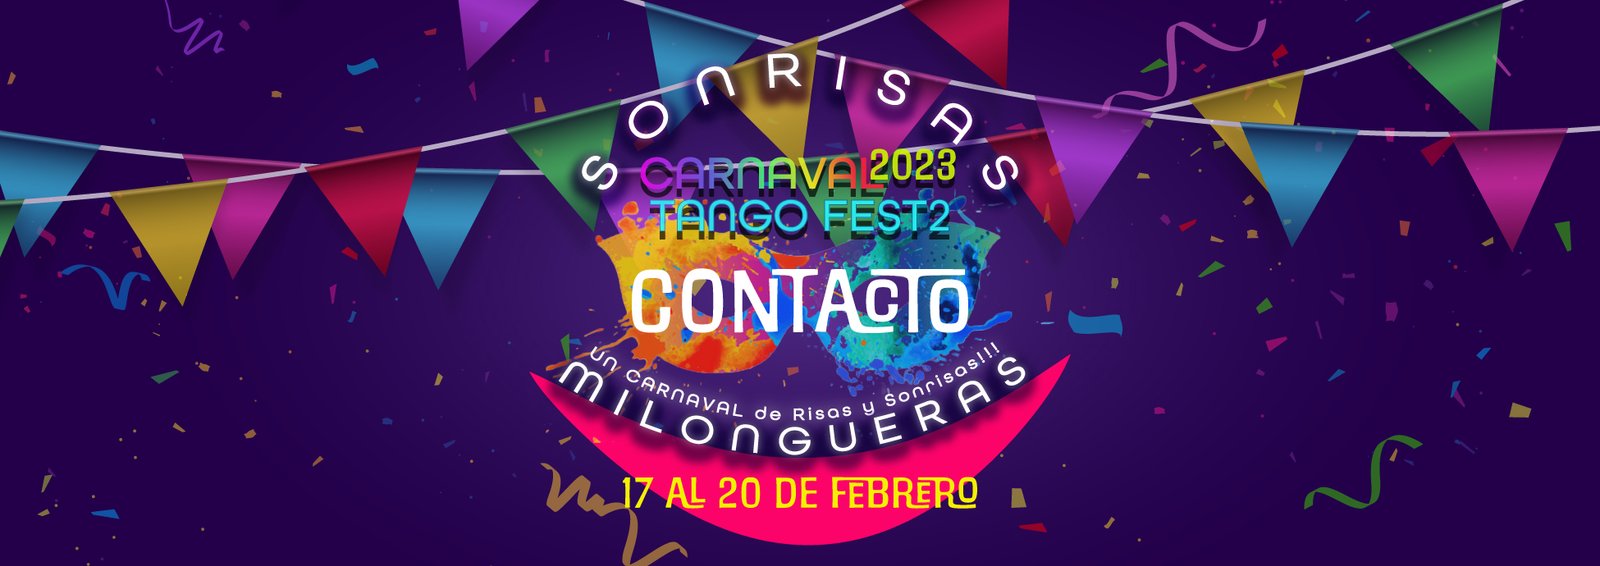 Carnaval Tango Fest2 Contacto